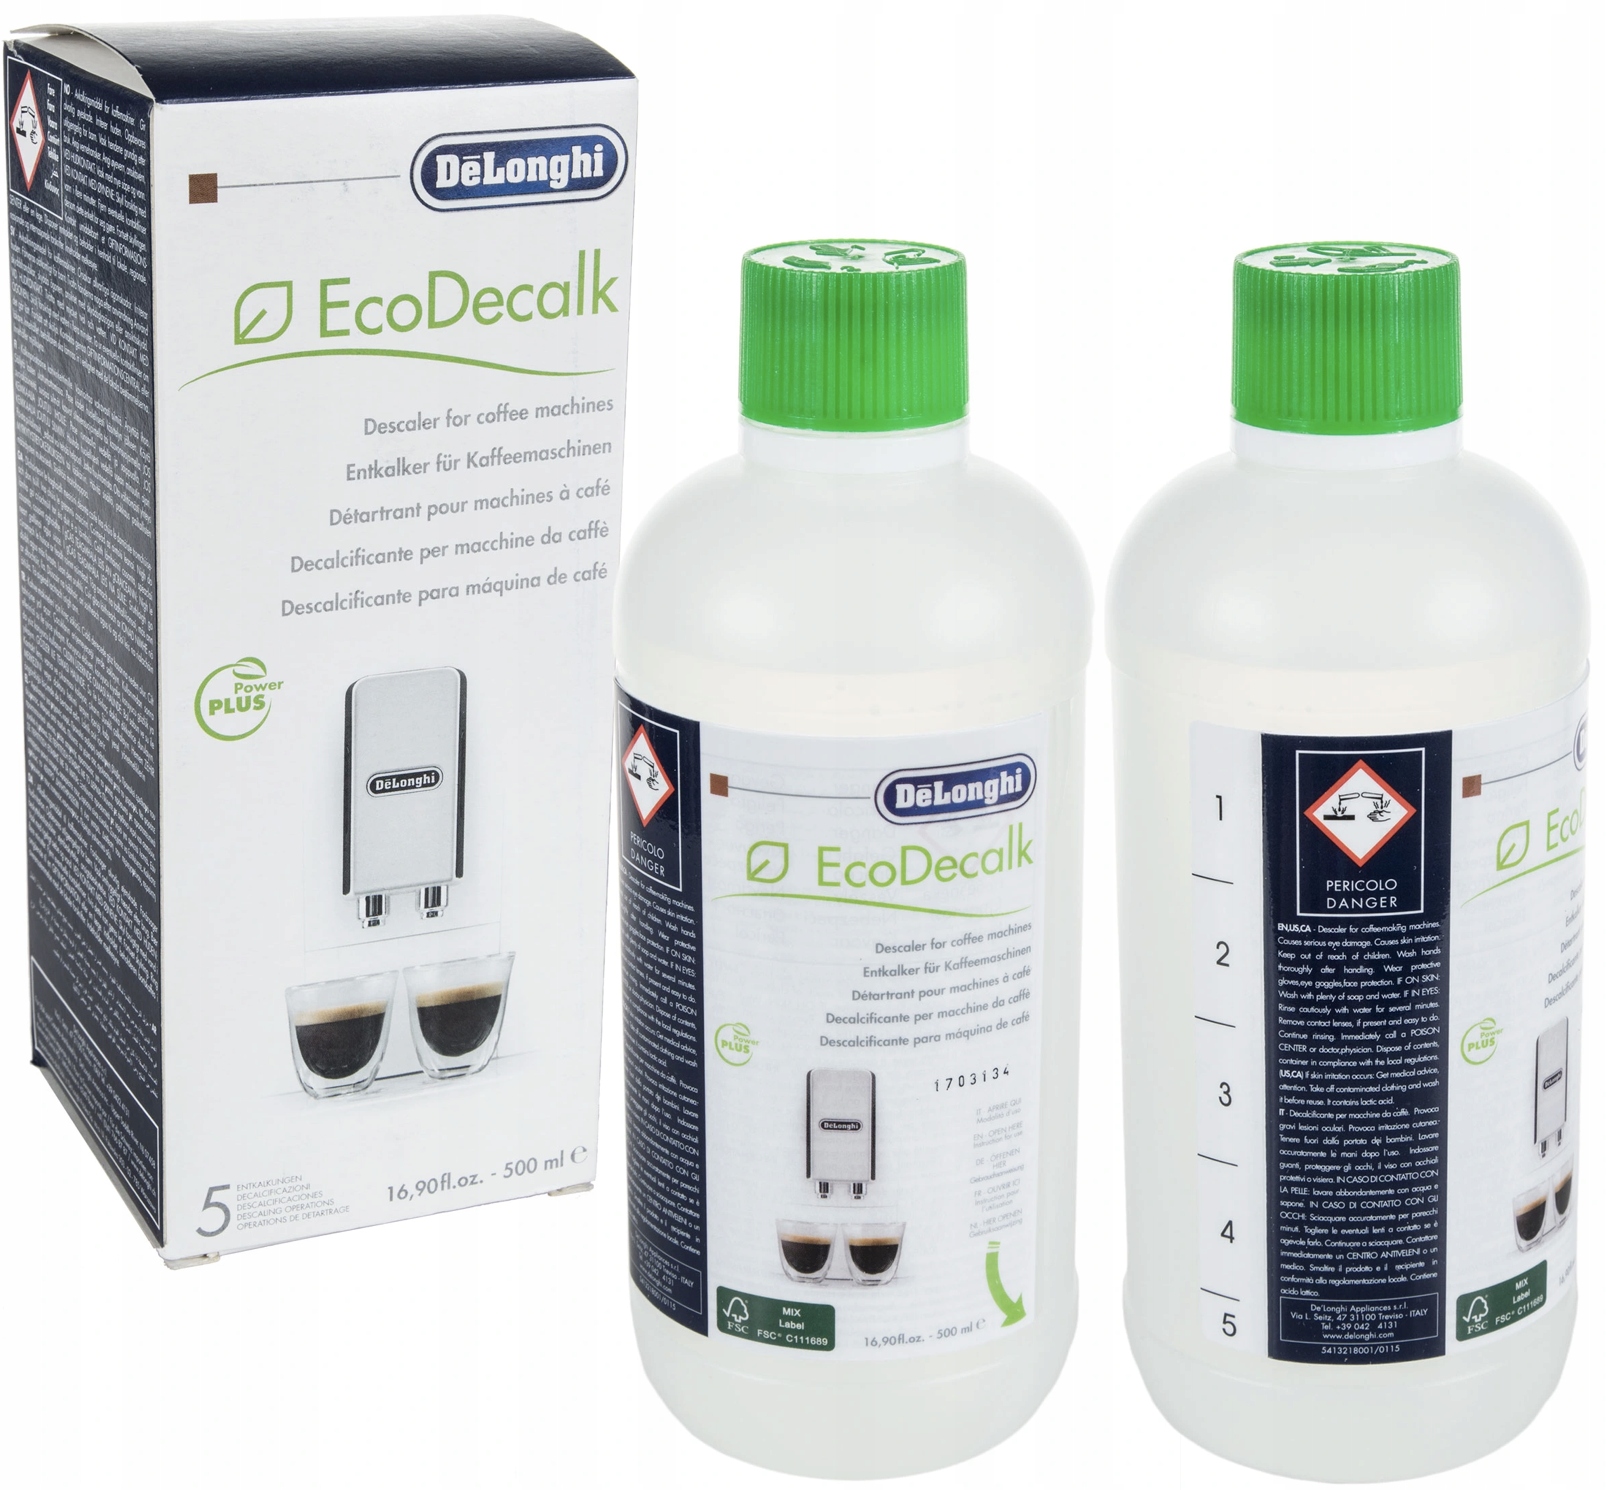 Delonghi Ecodecalk Descaler, Eco-friendly Universal Msi